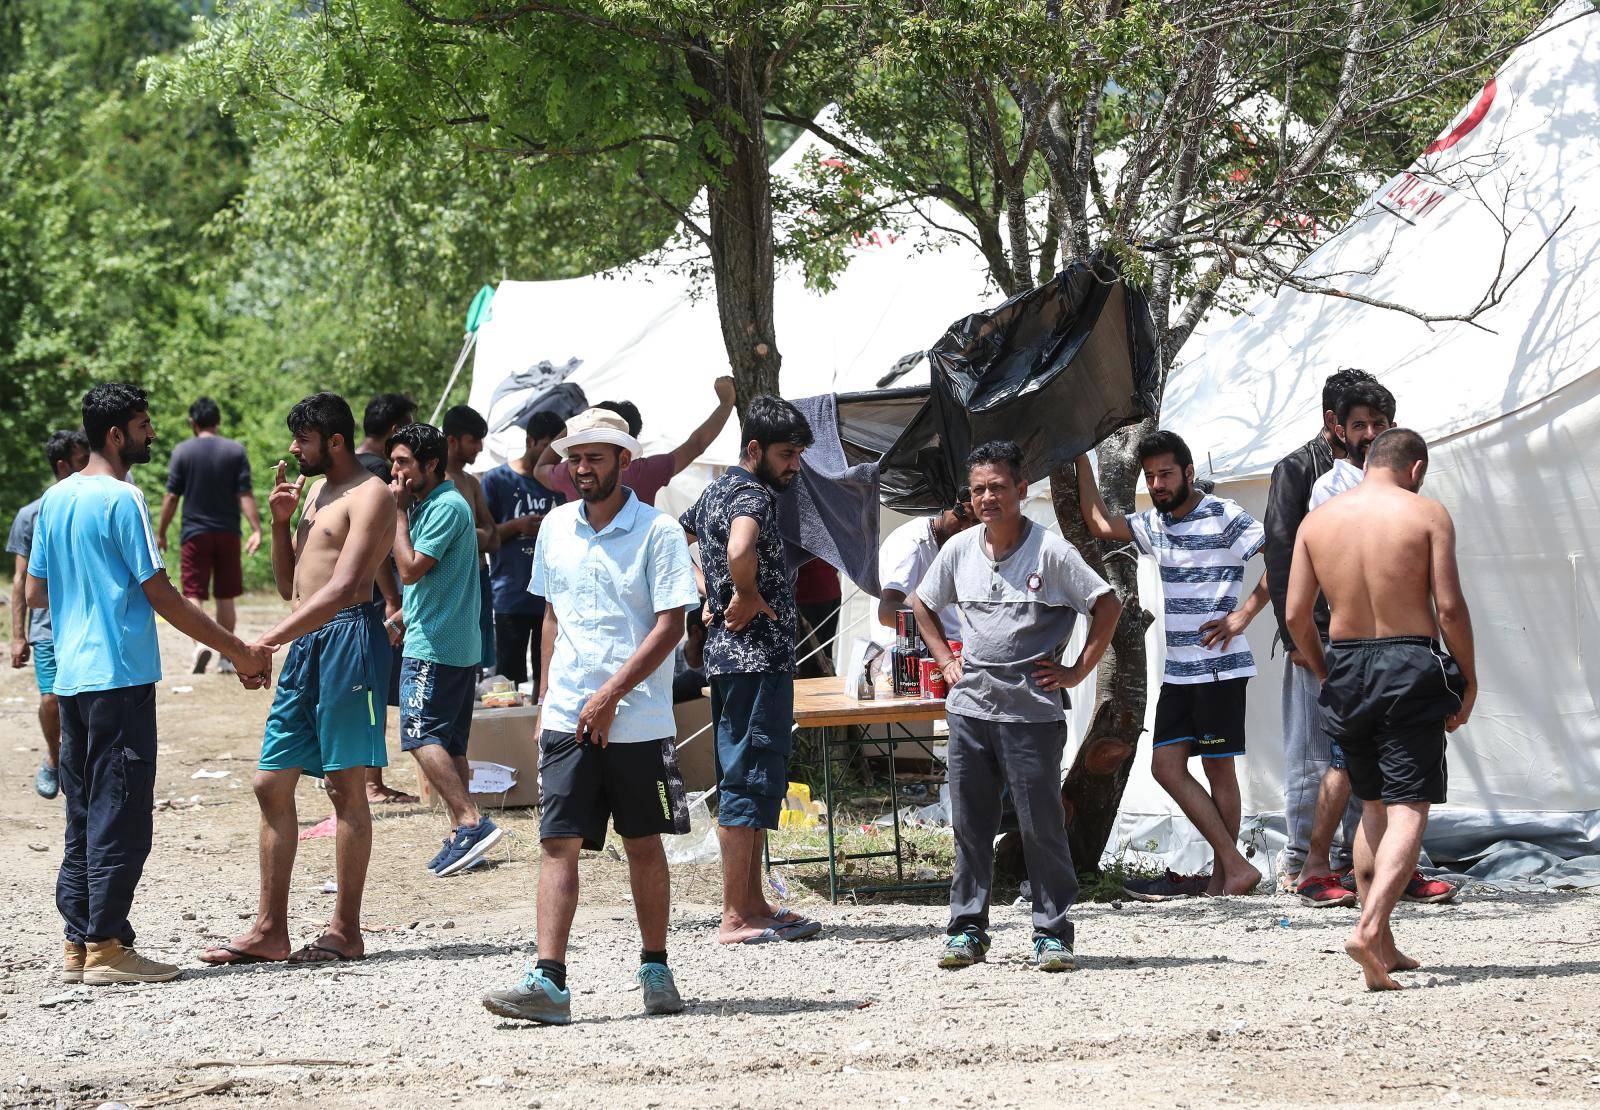 Migranti u Vučjaku: 'Nemamo hrane, liječnika, čak ni toalet'